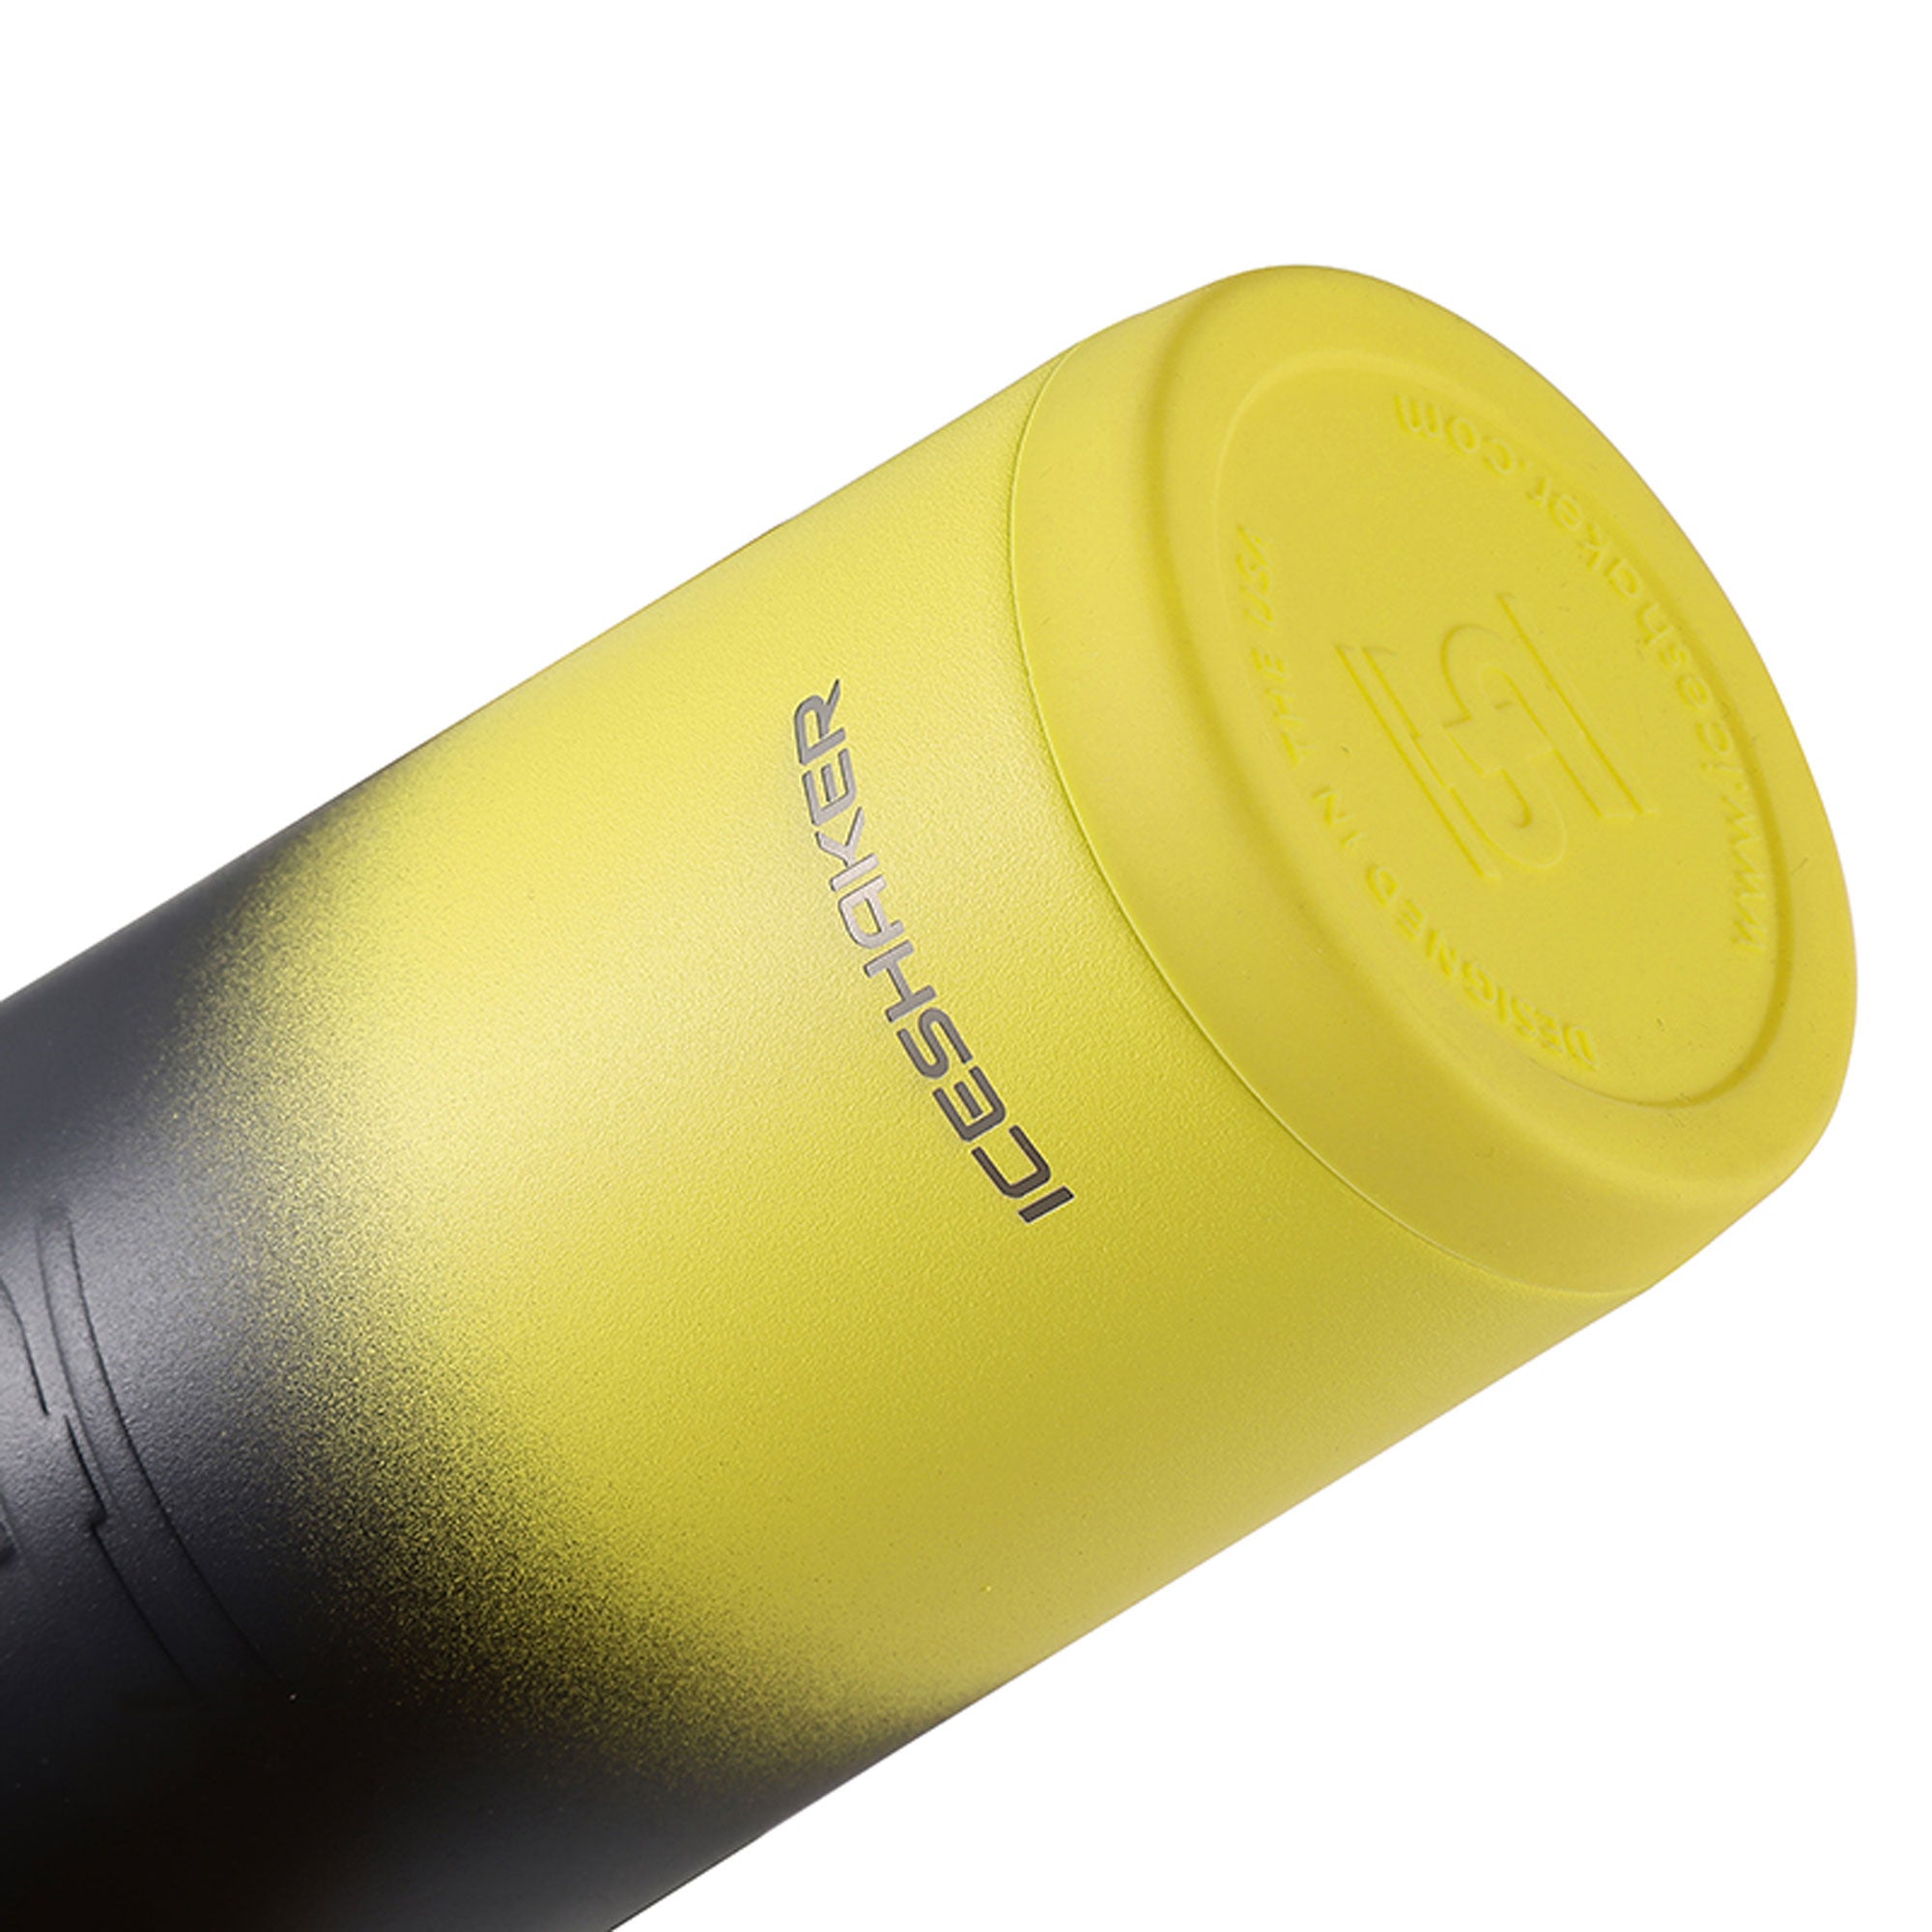 26oz Ice Shaker - Yellow Black Ombre